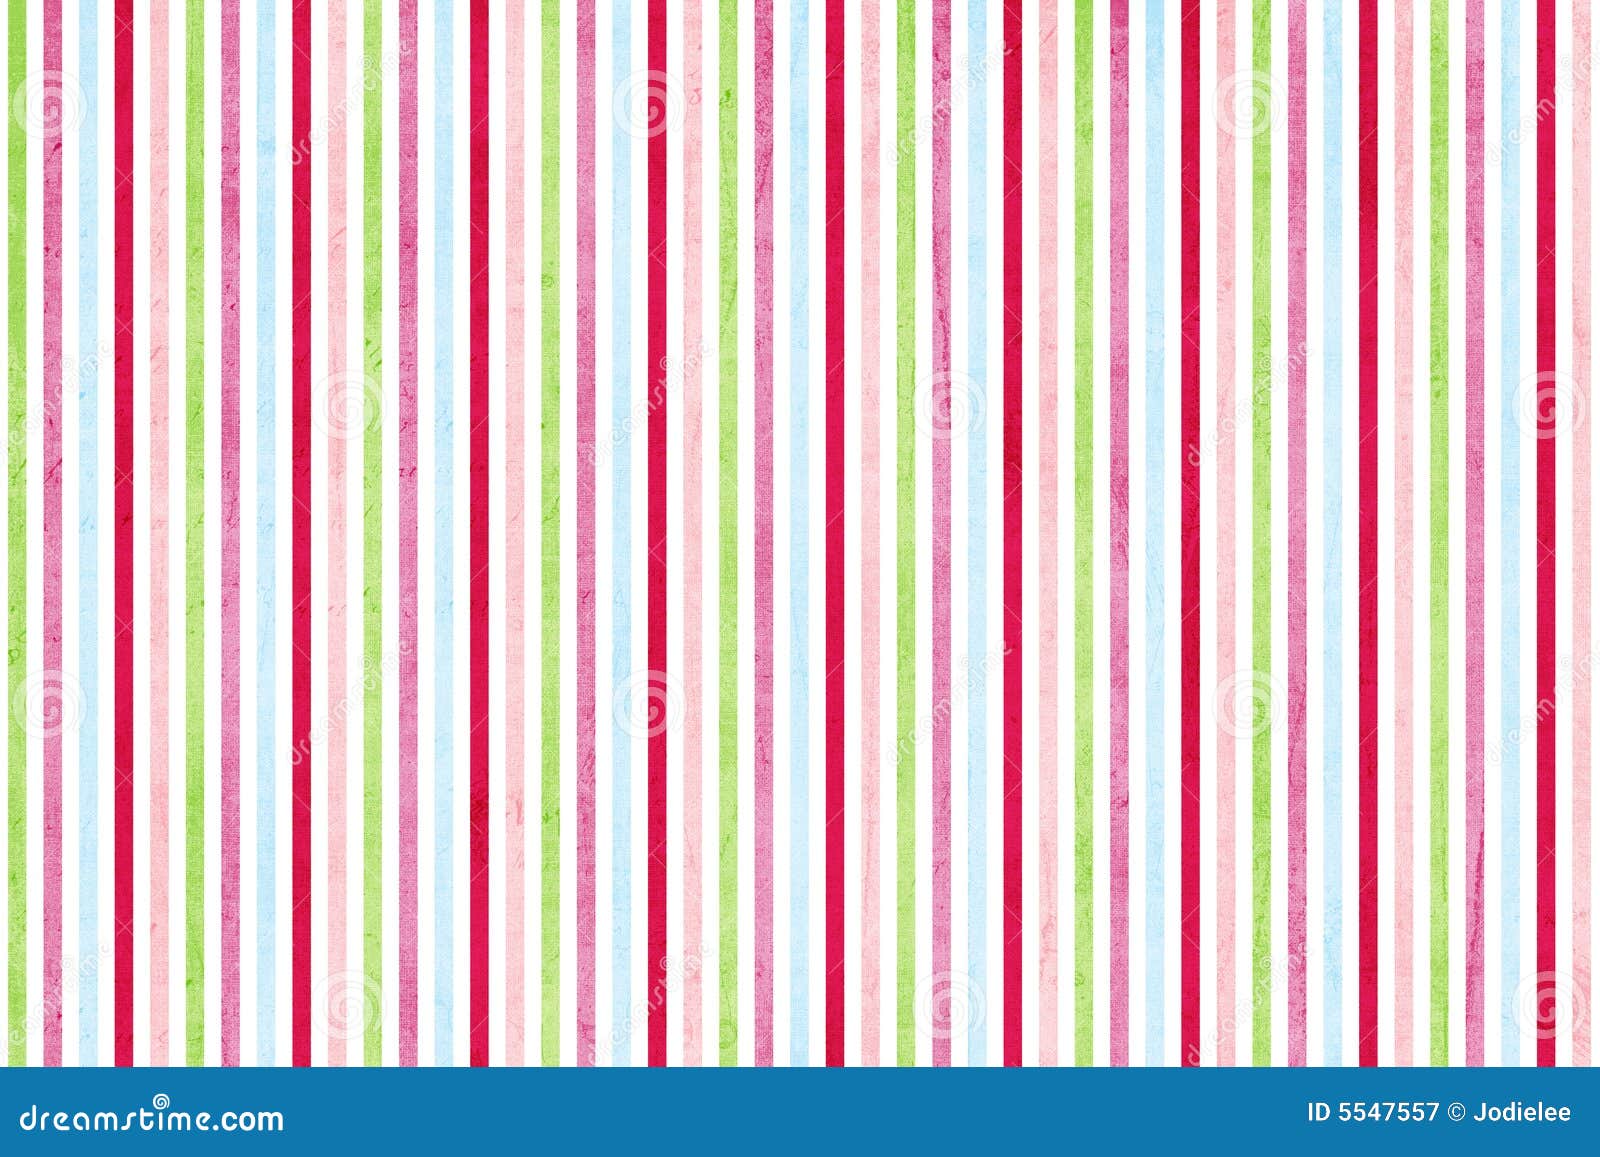 candy striped textured scrapbook paper